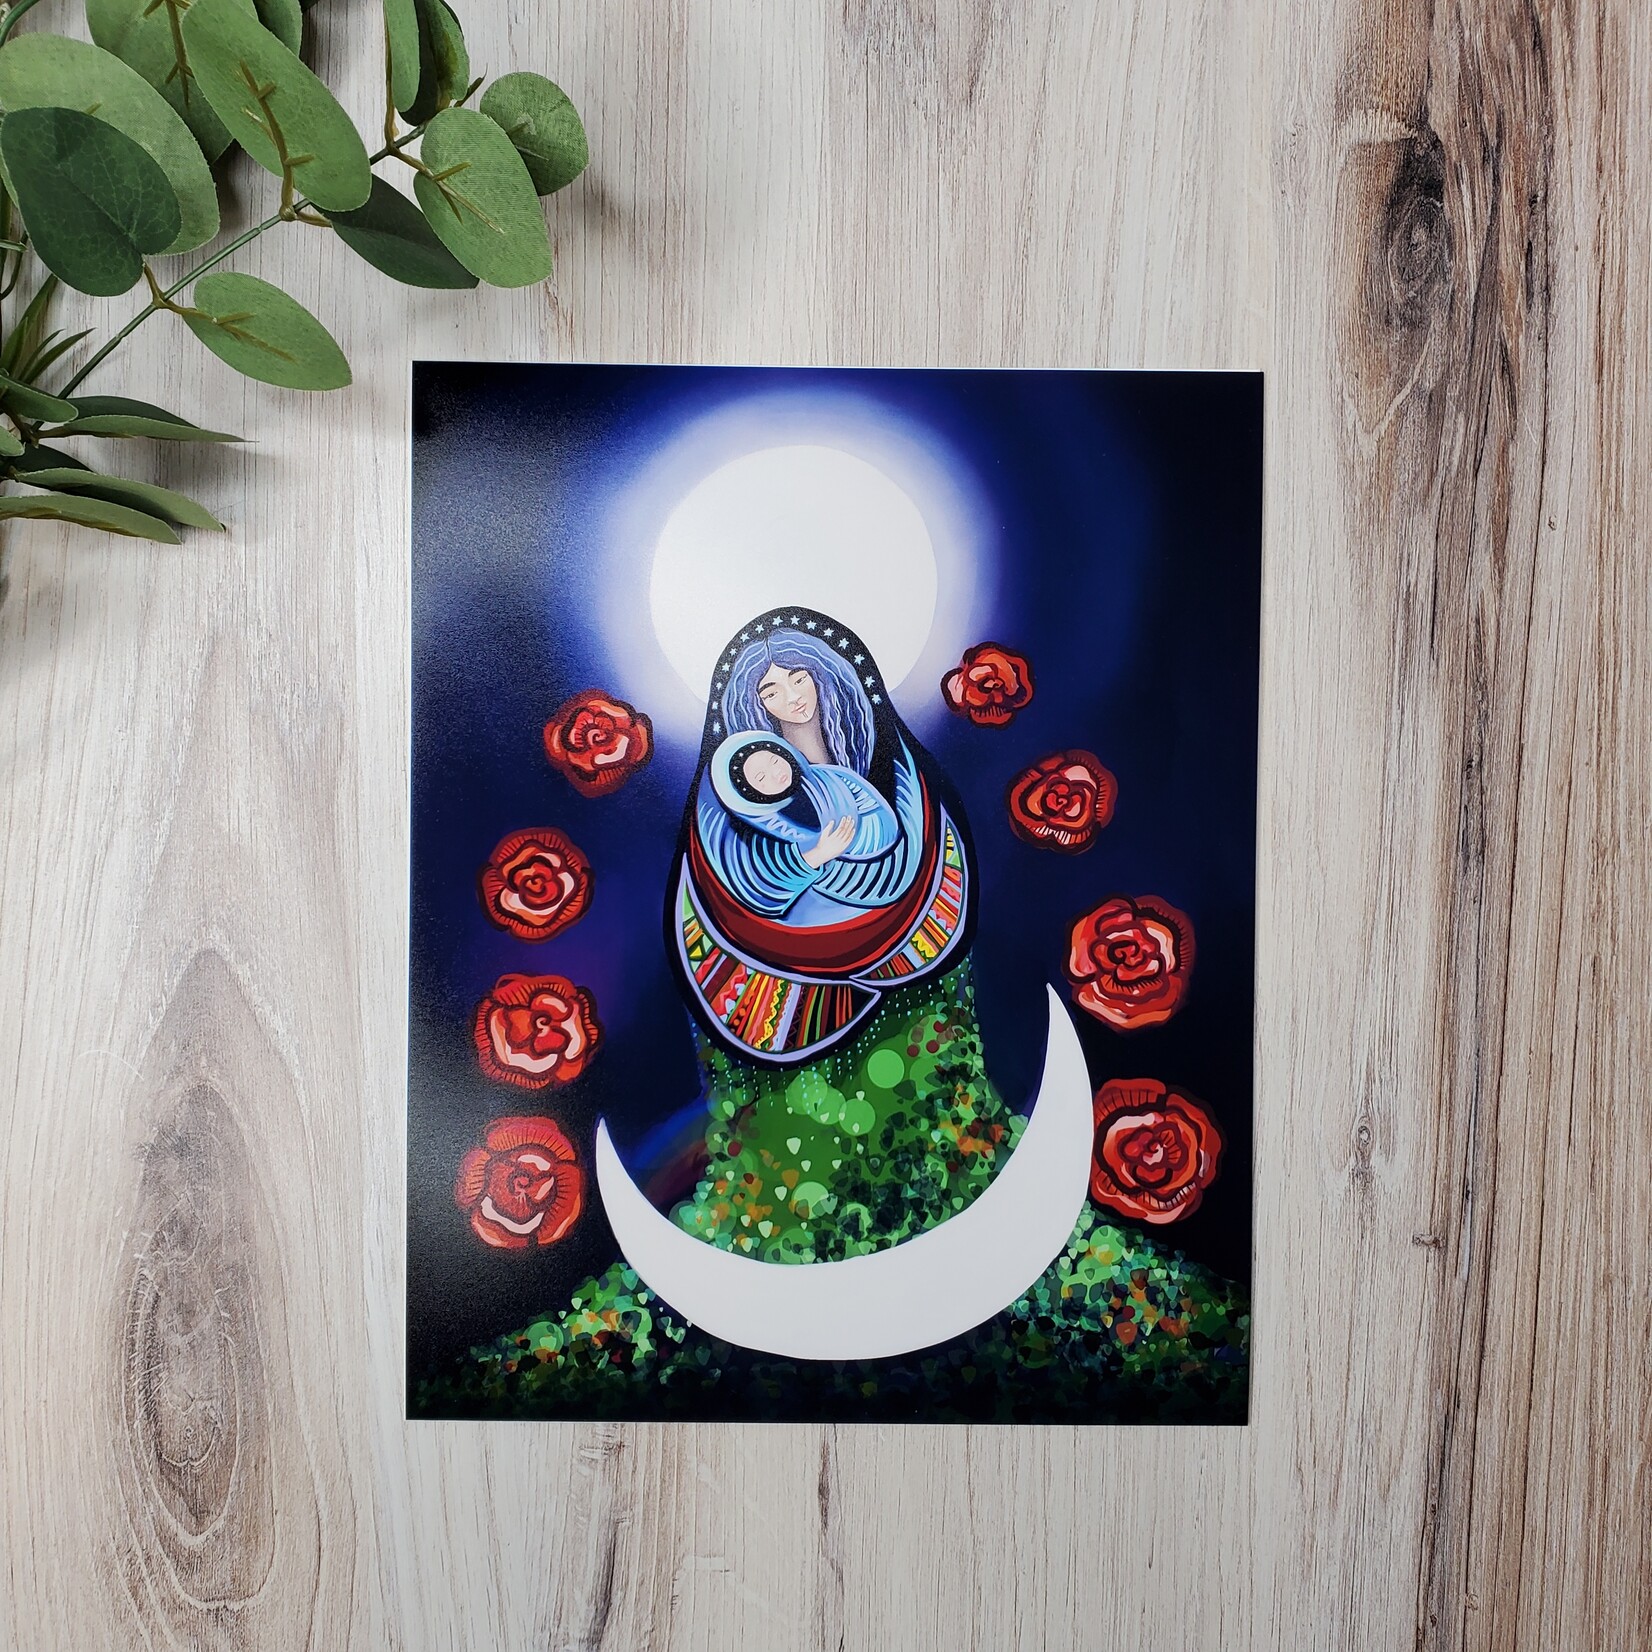 Asja Dawn "Mother Moon" - 8x10